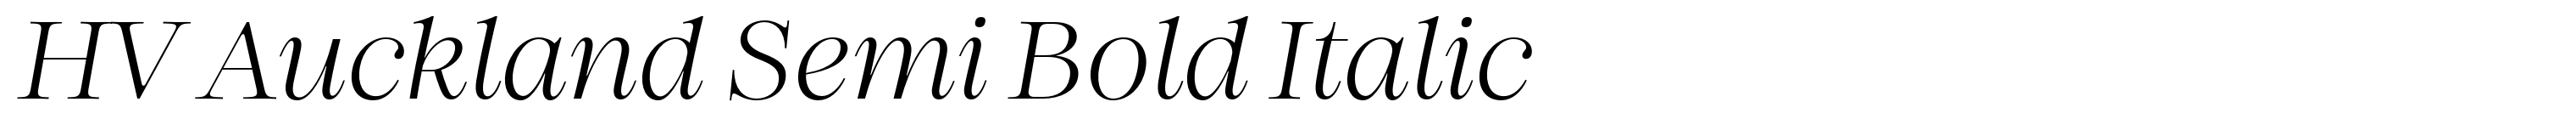 HV Auckland Semi Bold Italic